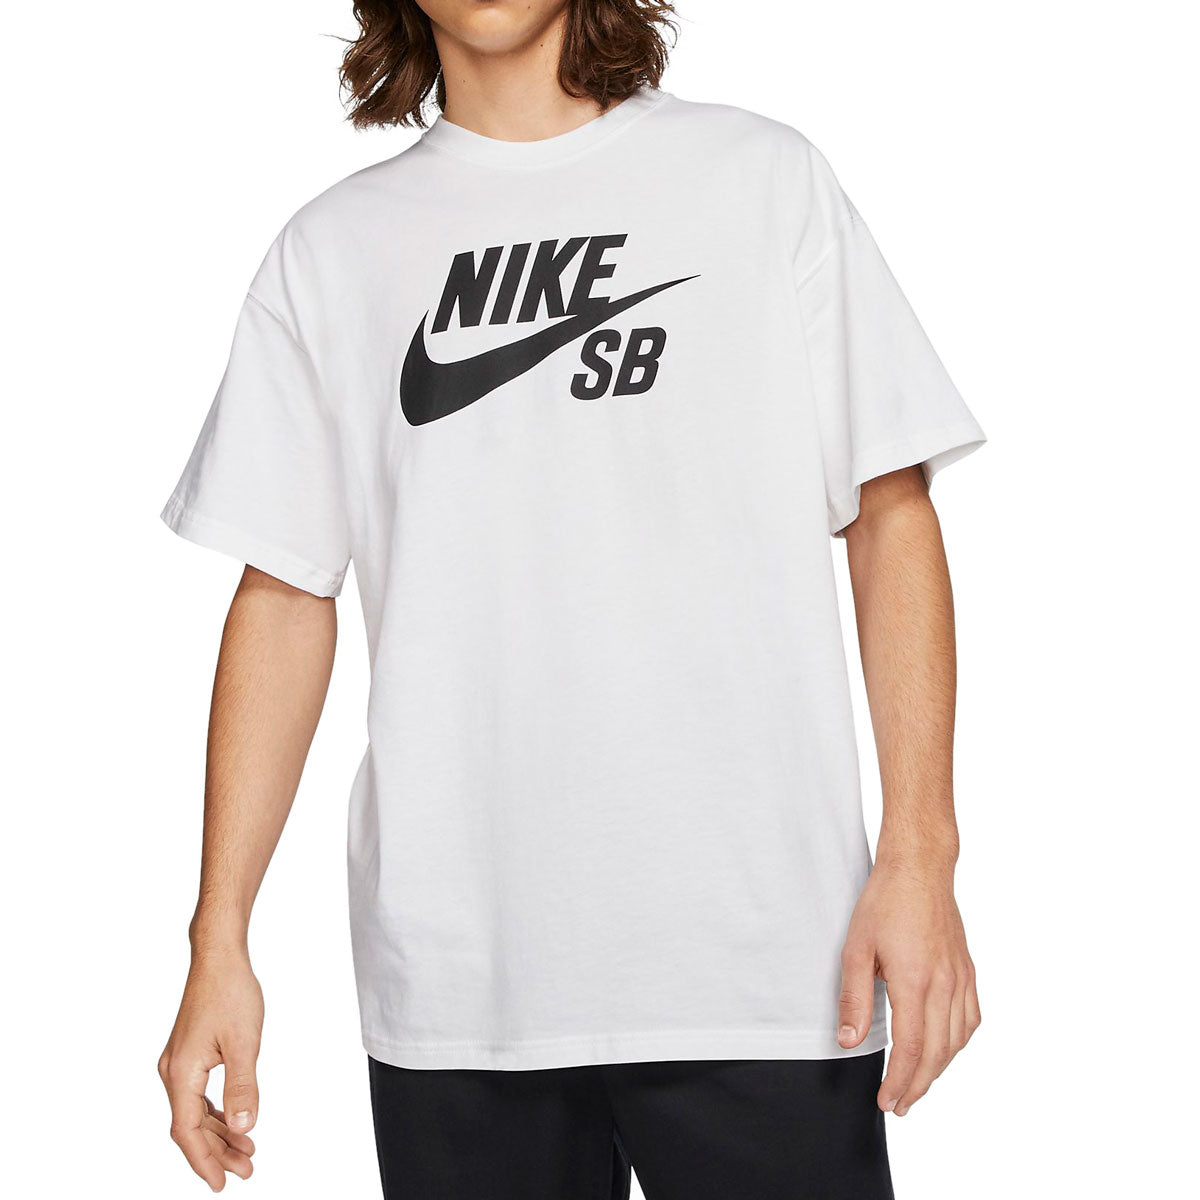 Nike SB T-Shirt - White/Black image 1